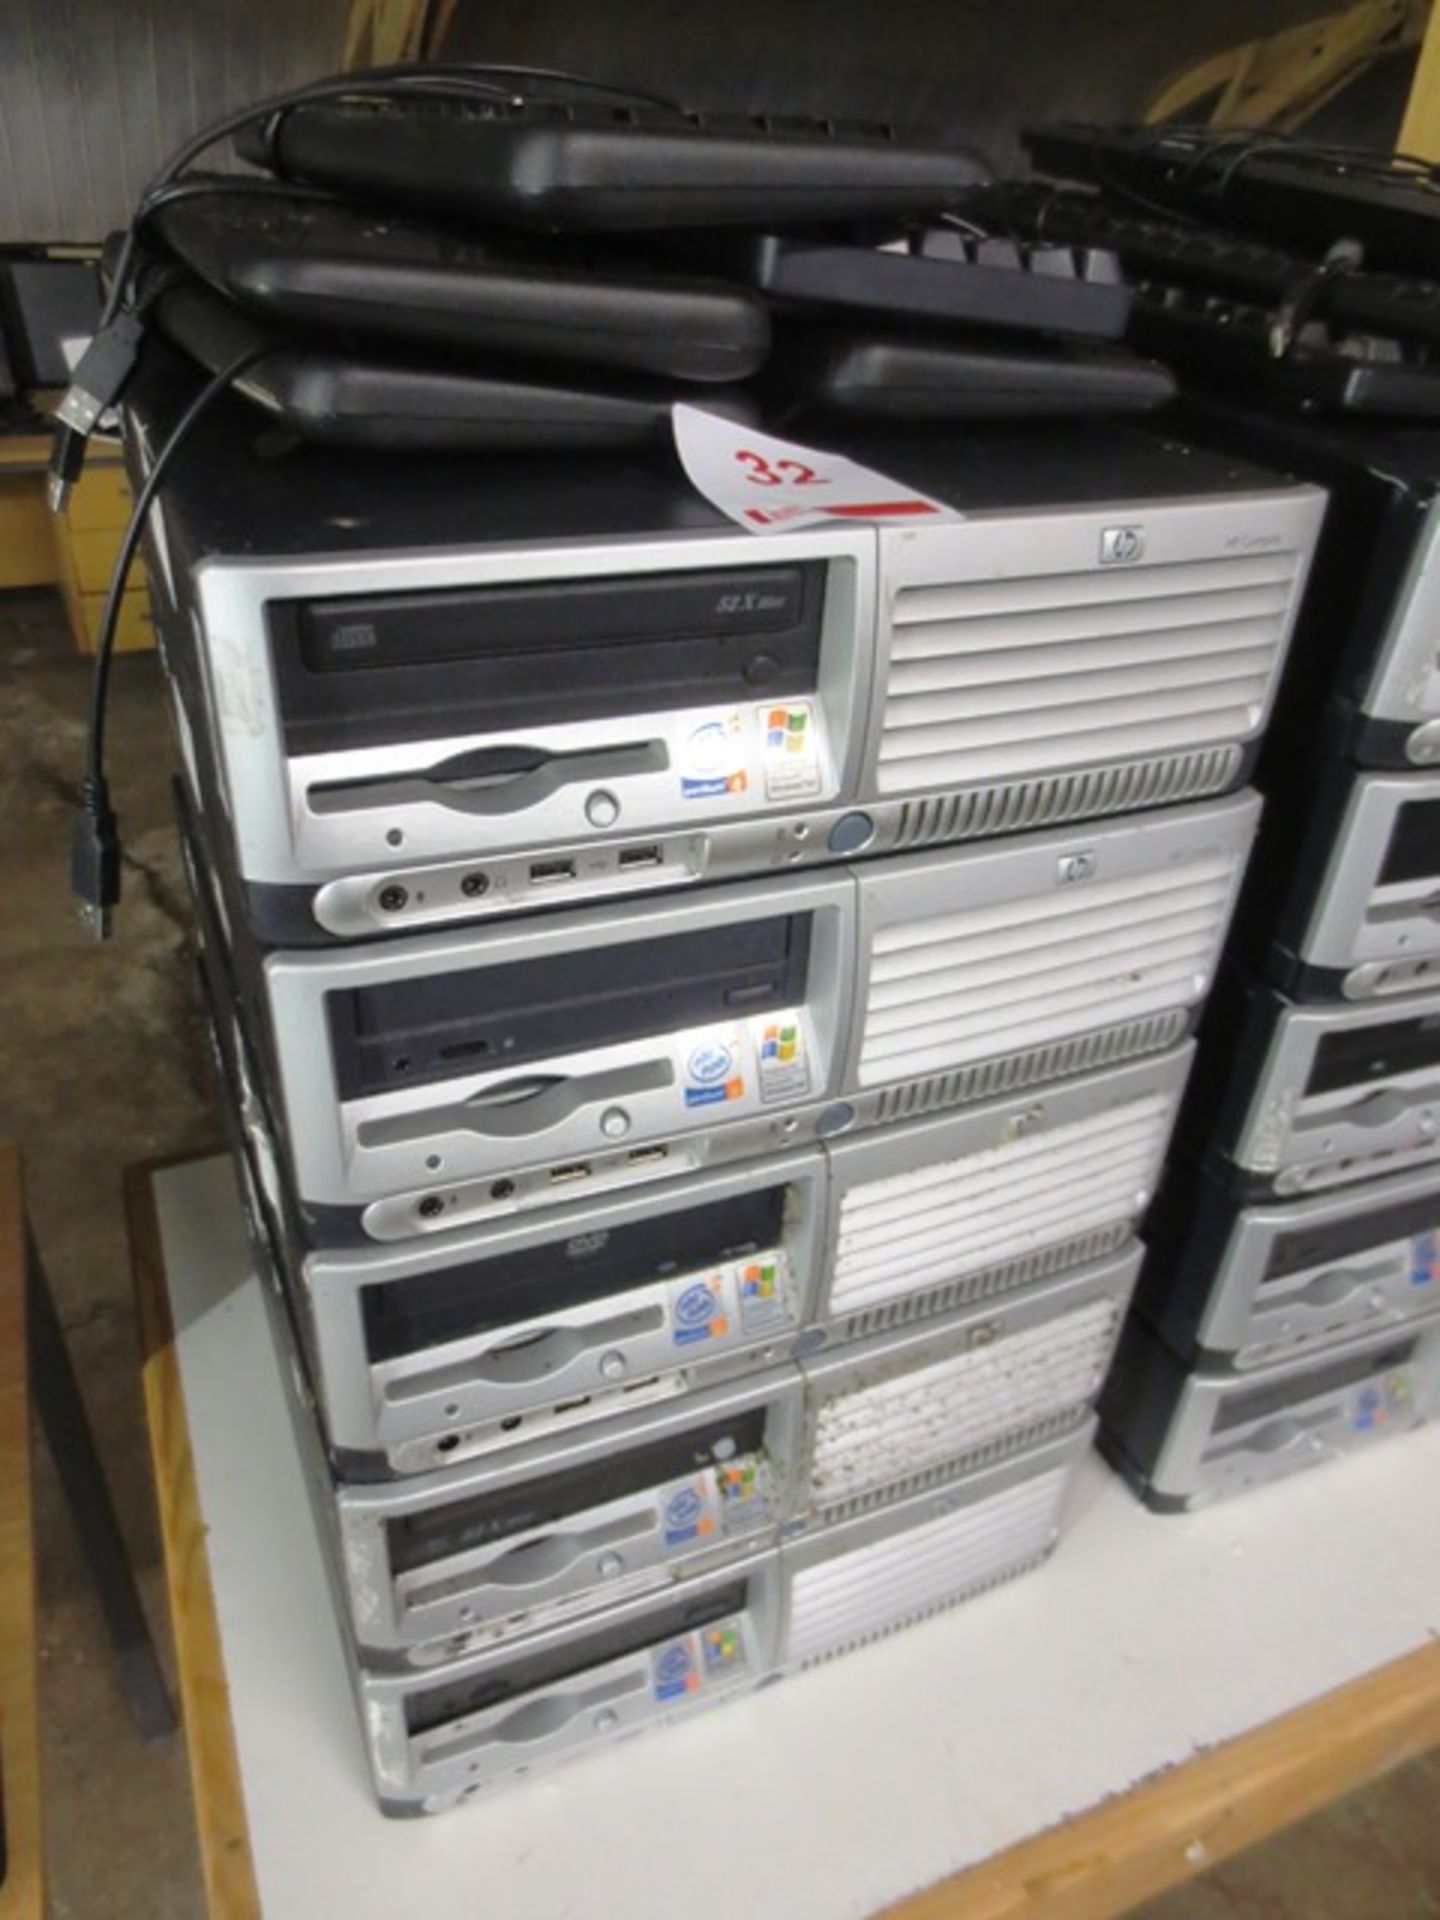 Five HP Compaq desktop PC units, with Intel Pentium 4 processors, five keyboards